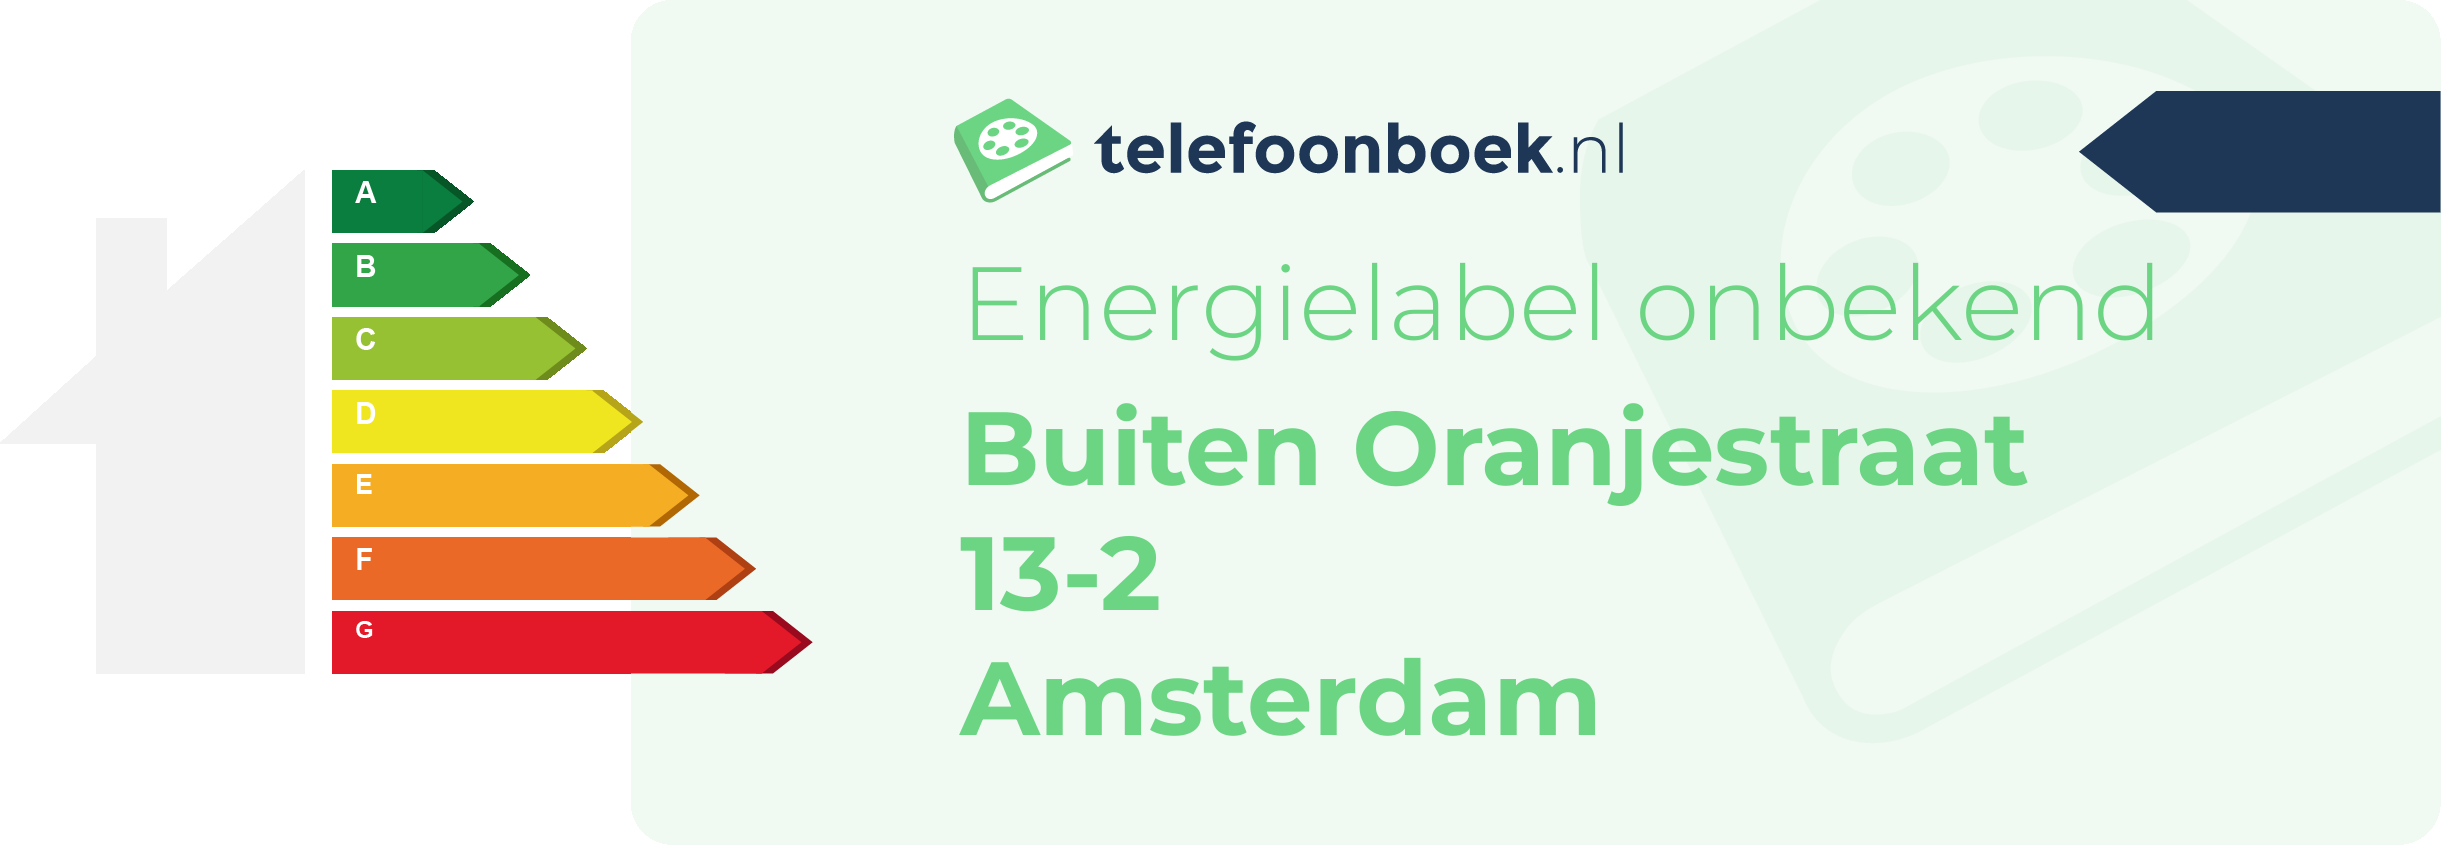 Energielabel Buiten Oranjestraat 13-2 Amsterdam